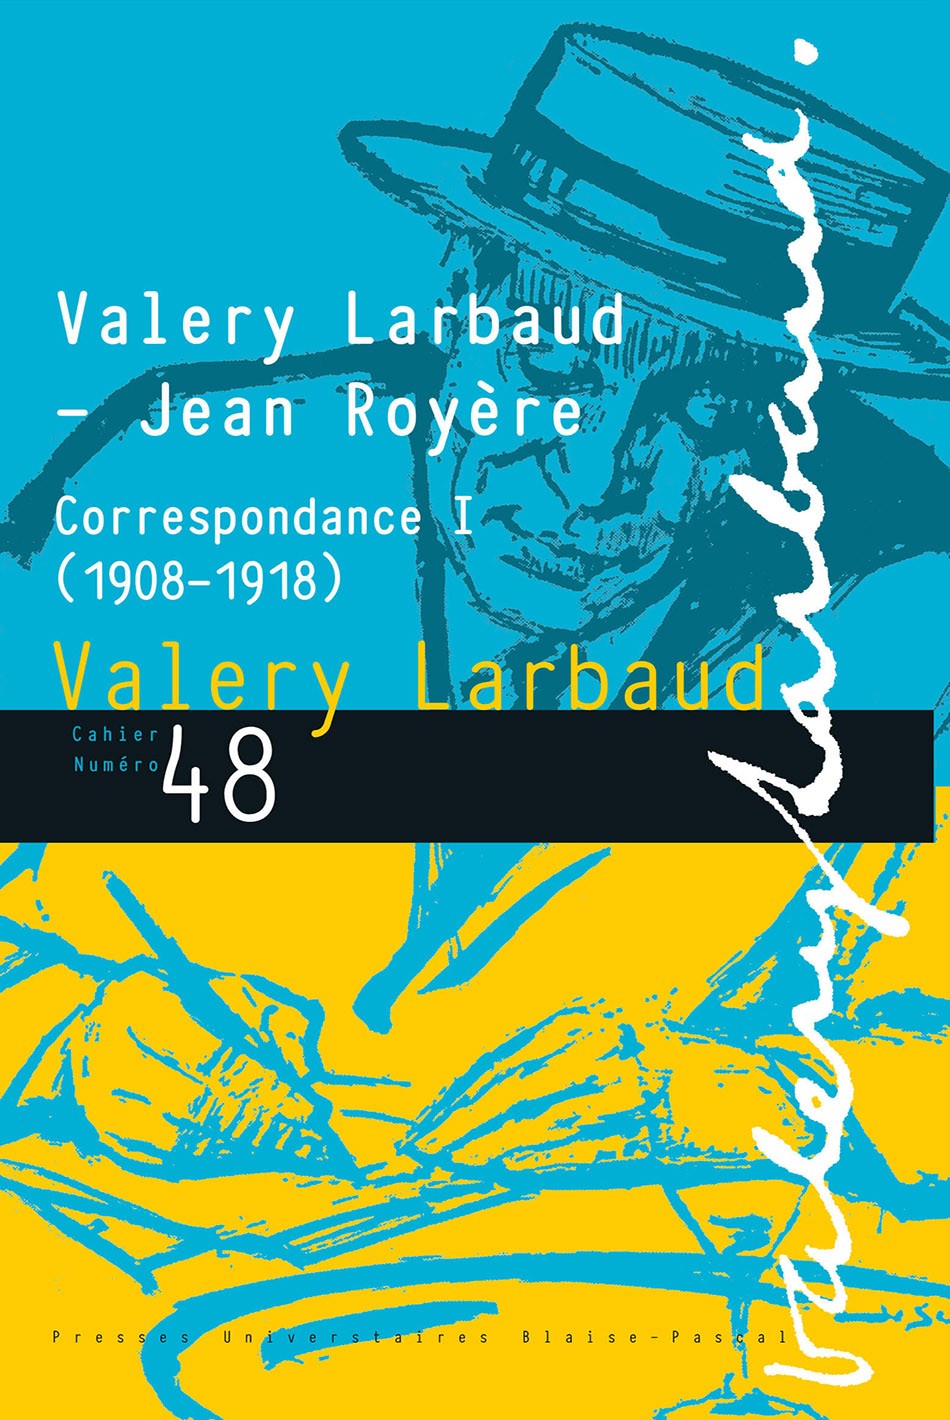 Valery Larbaud – Jean Royère